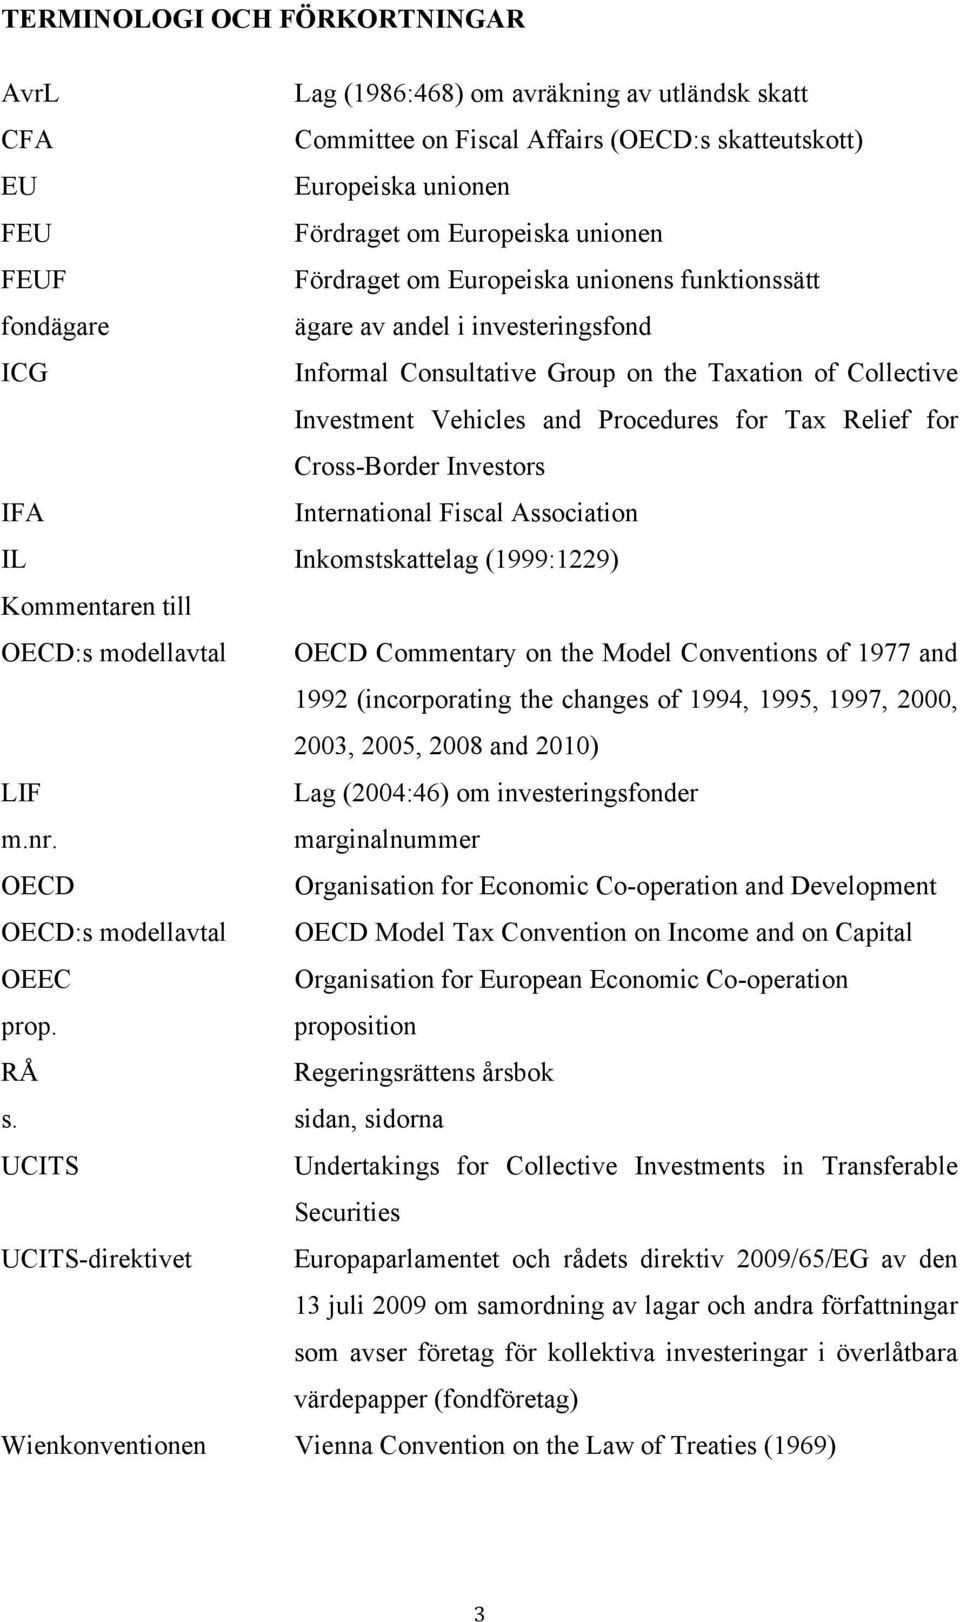 Relief for Cross-Border Investors IFA International Fiscal Association IL Inkomstskattelag (1999:1229) Kommentaren till OECD:s modellavtal OECD Commentary on the Model Conventions of 1977 and 1992